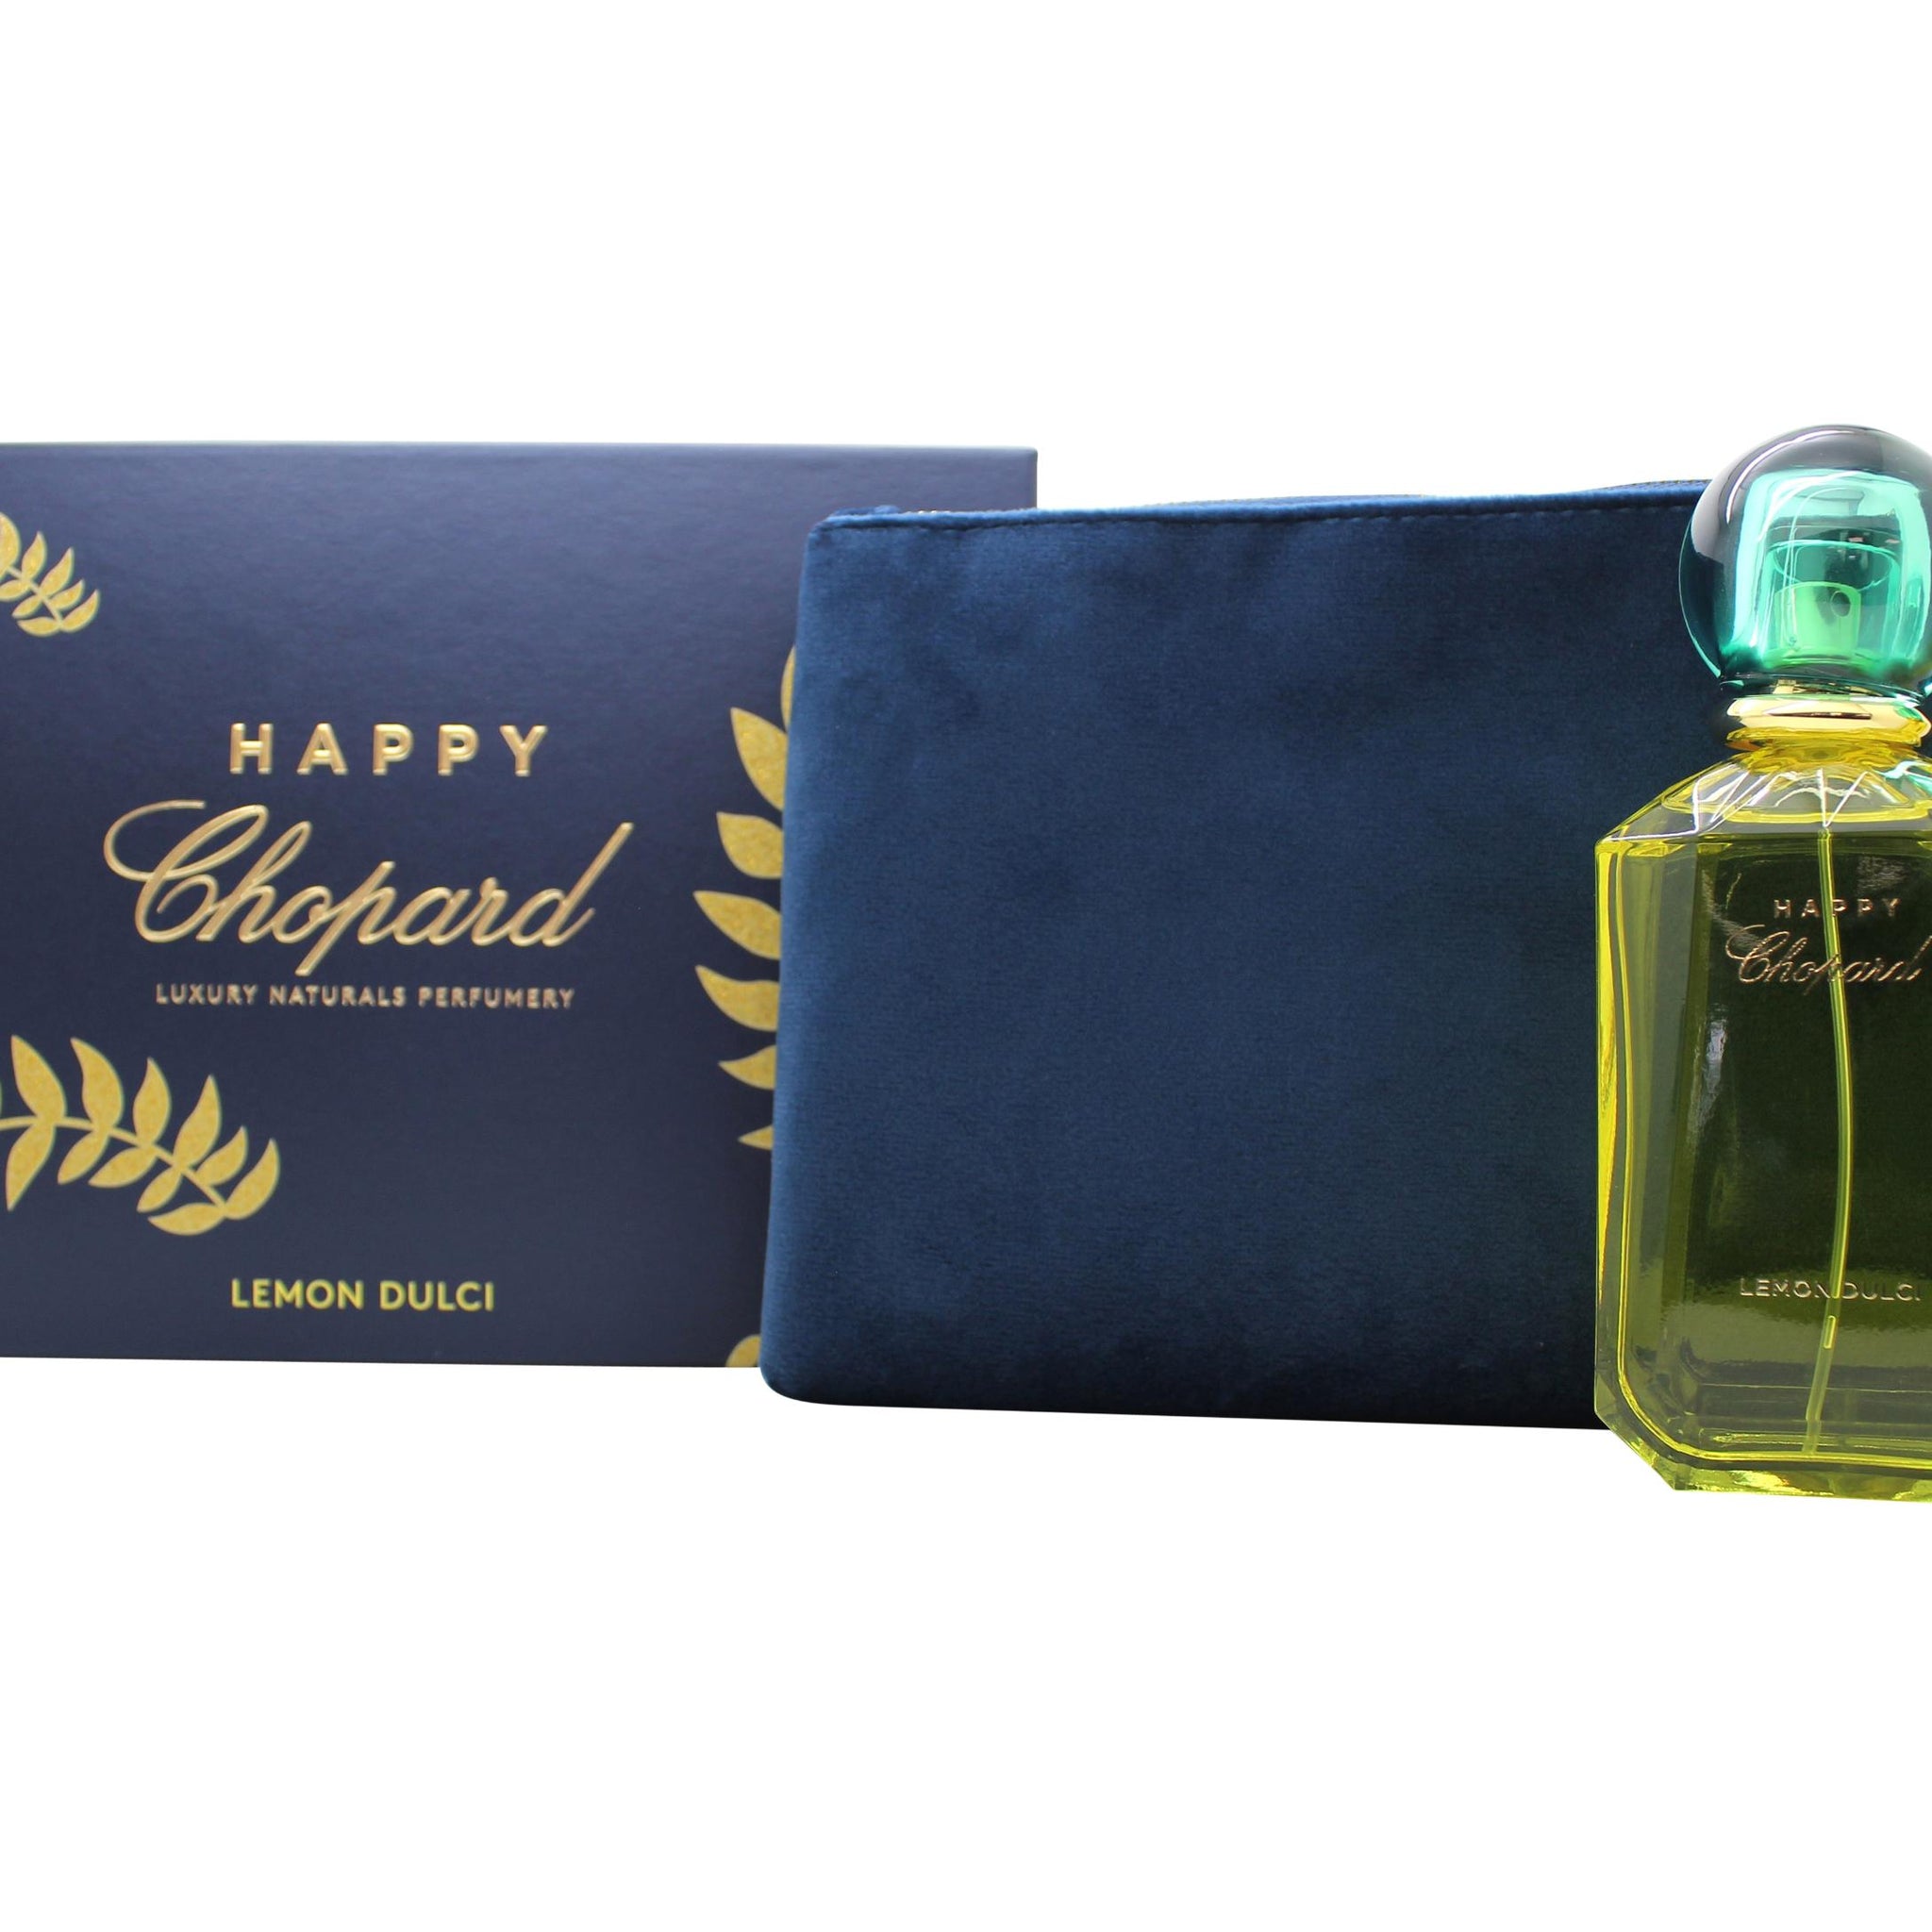 Chopard Happy Chopard Lemon Dulci Gift Set 100ml EDP + 10ml EDP + Pouch